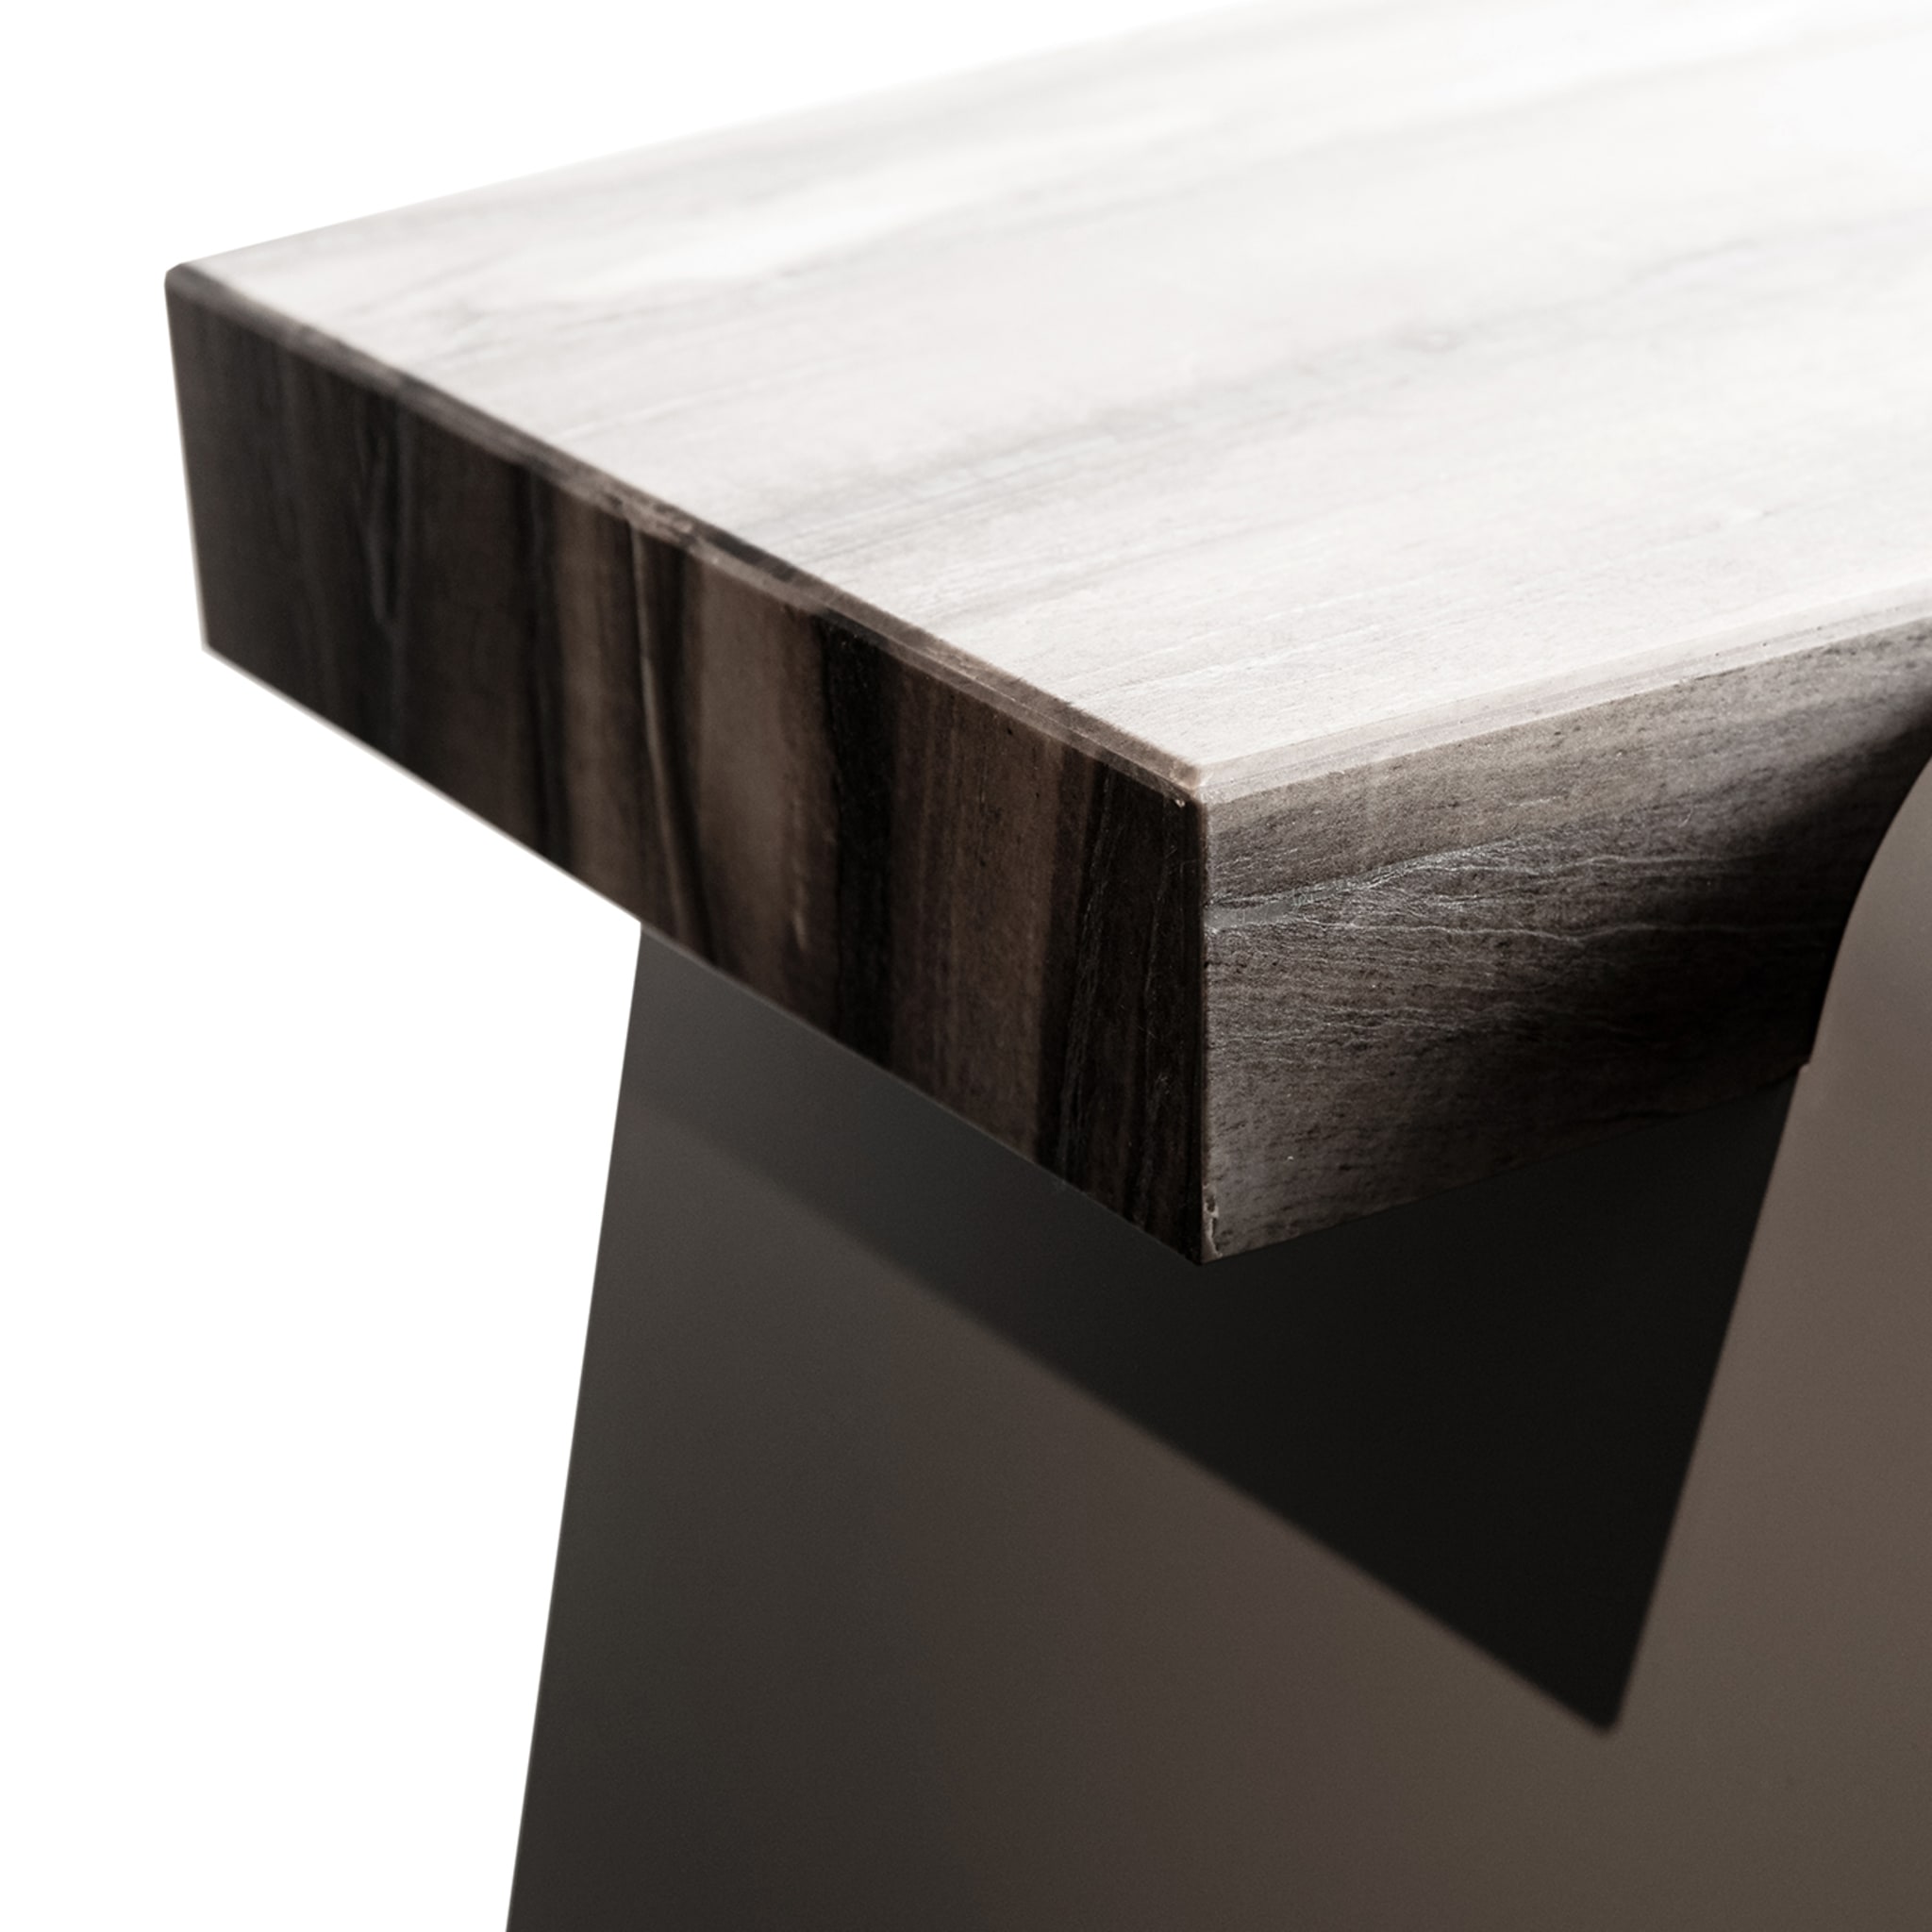 Tabula Rasa N°1 Silver Table by MM Design  - Alternative view 2